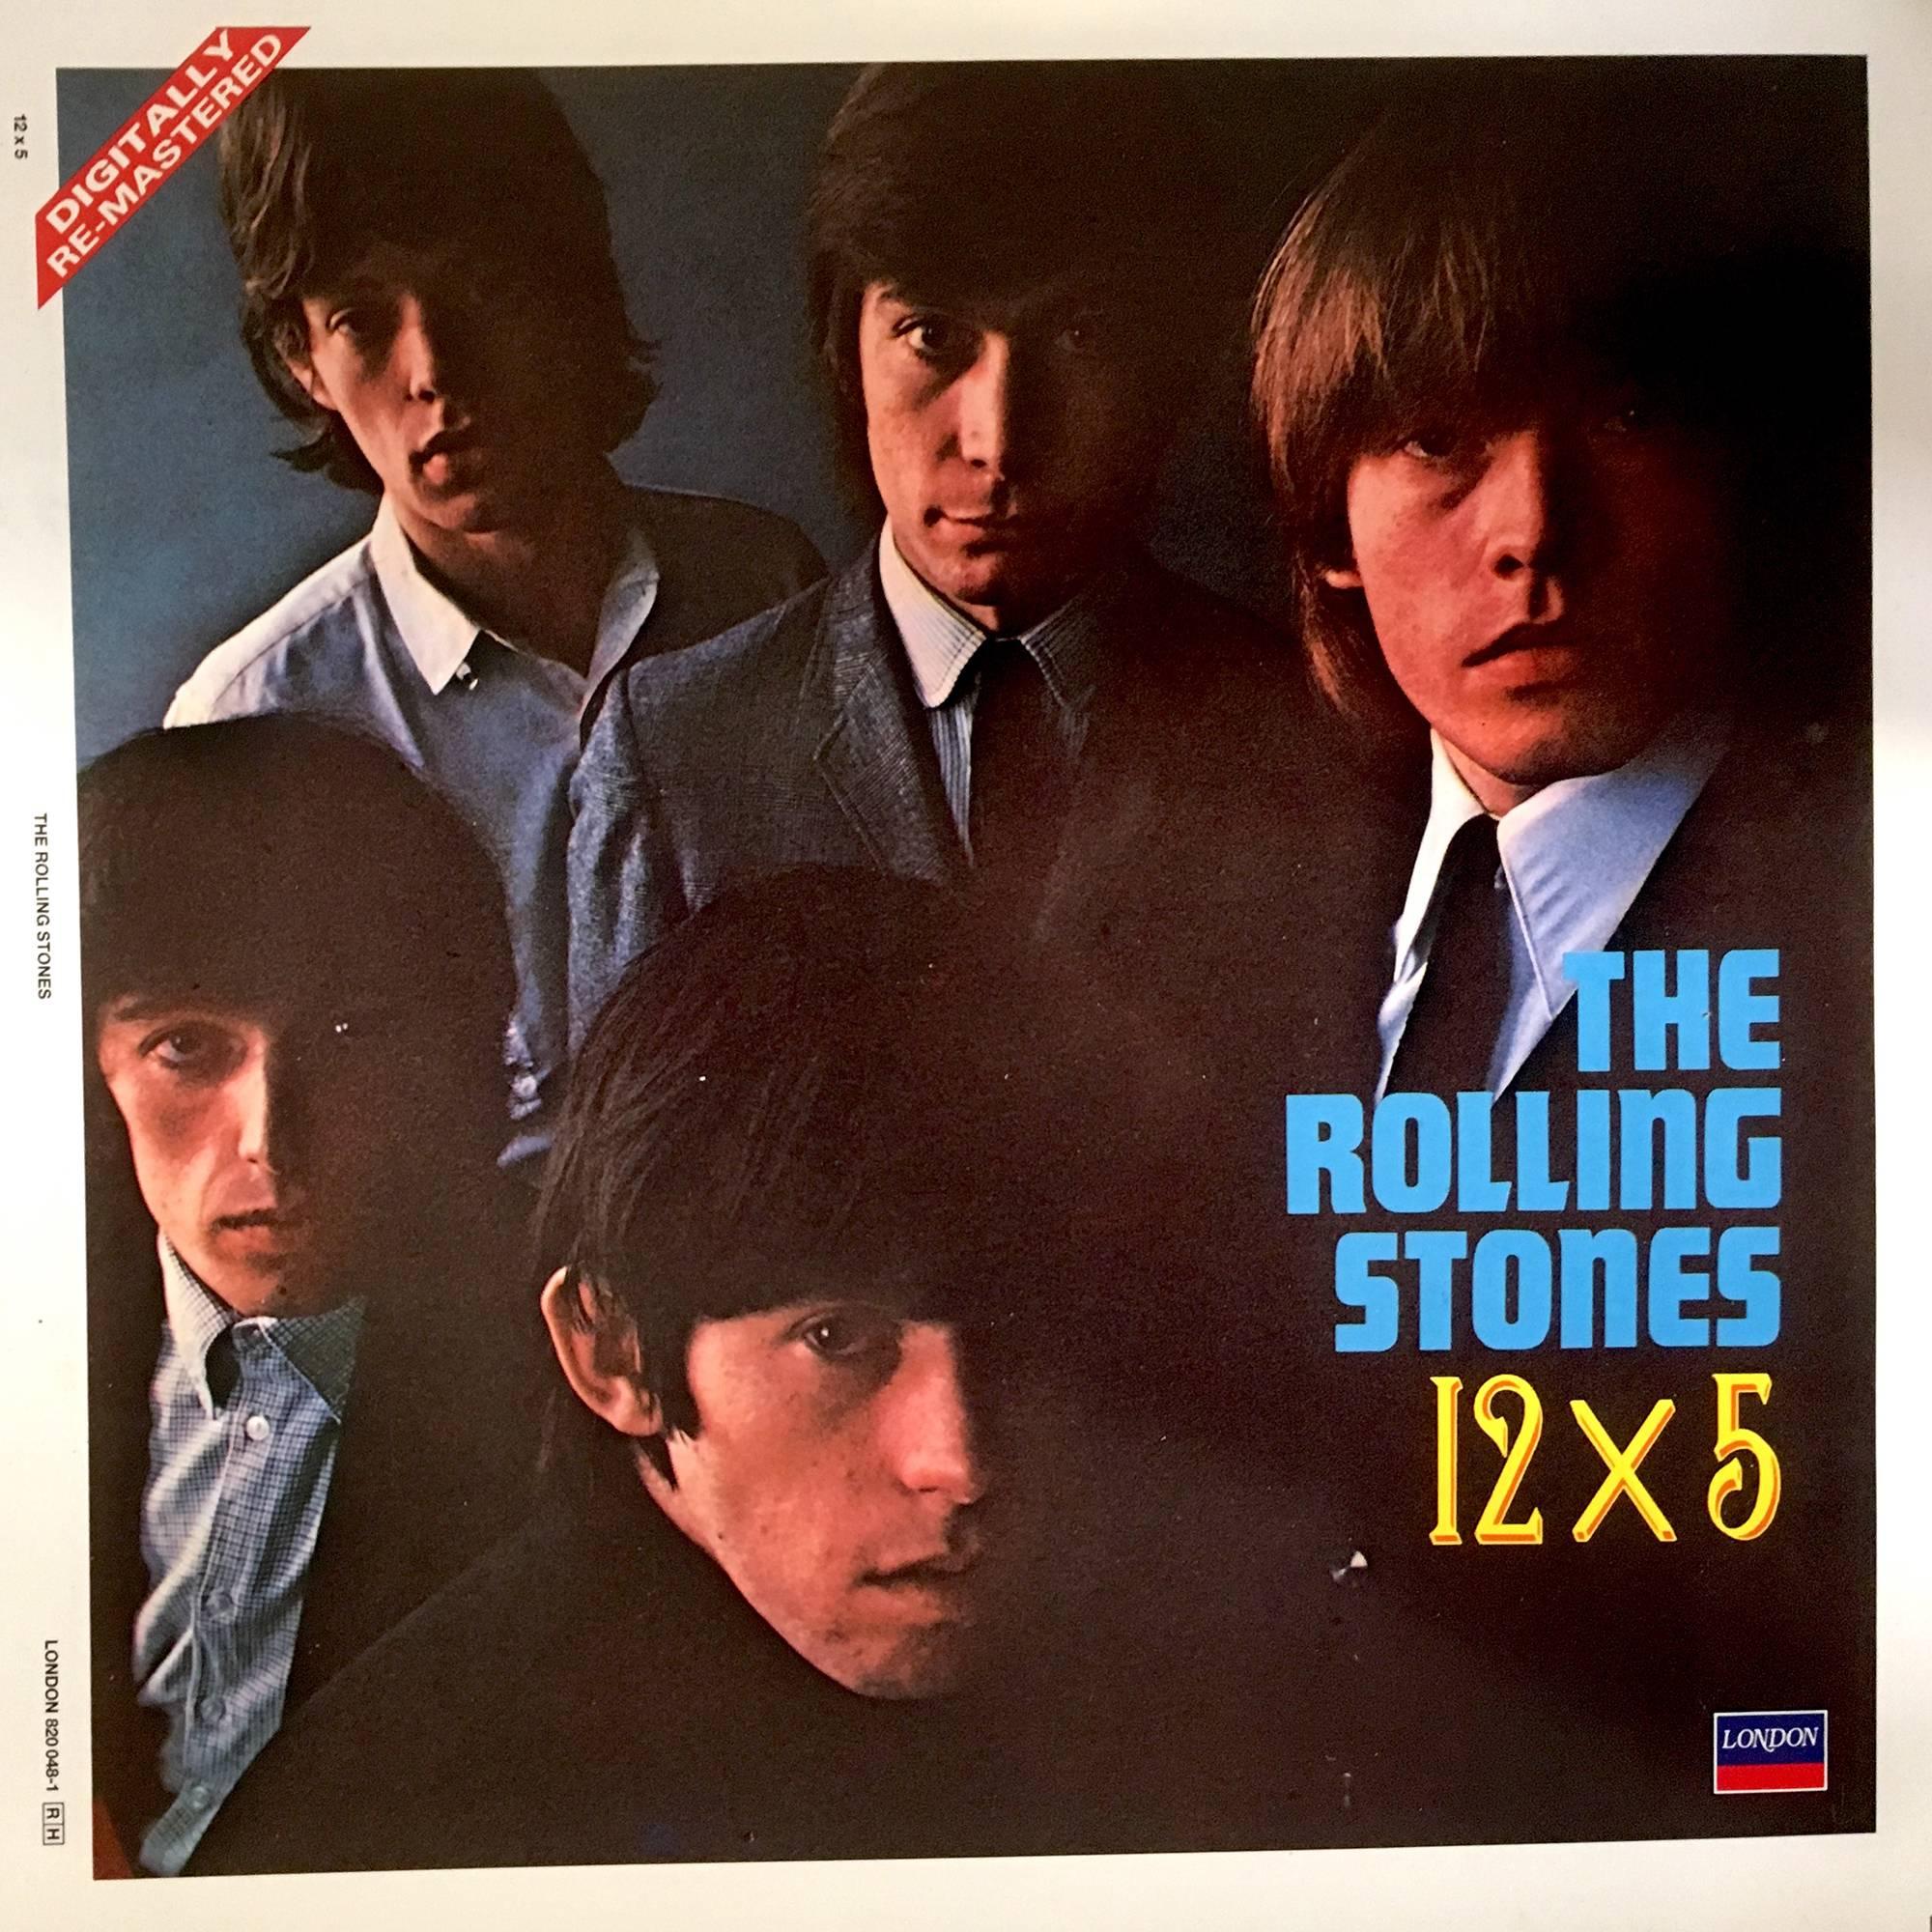 rolling stones 12x5 vinyl value